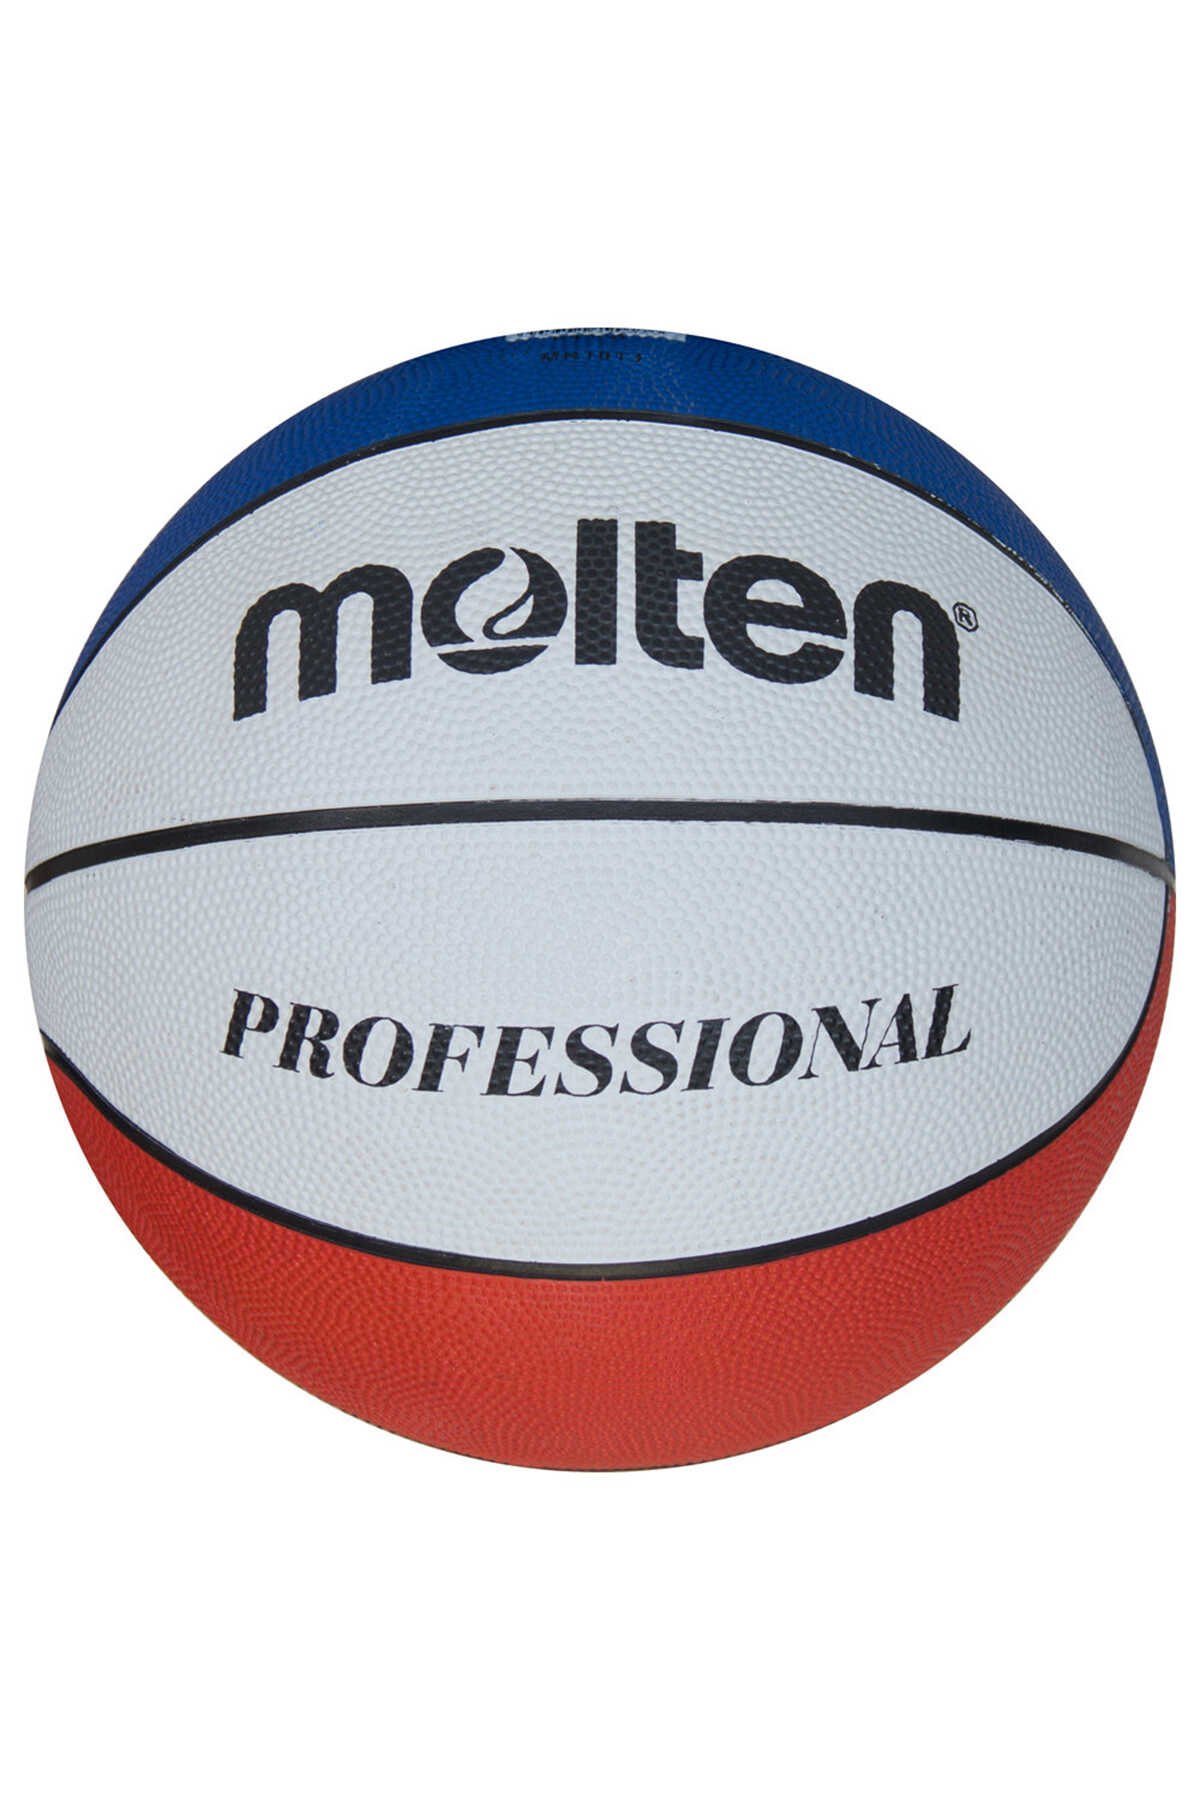 Molten - Molten 7 Numara Basket Topu Beyaz / Mavi